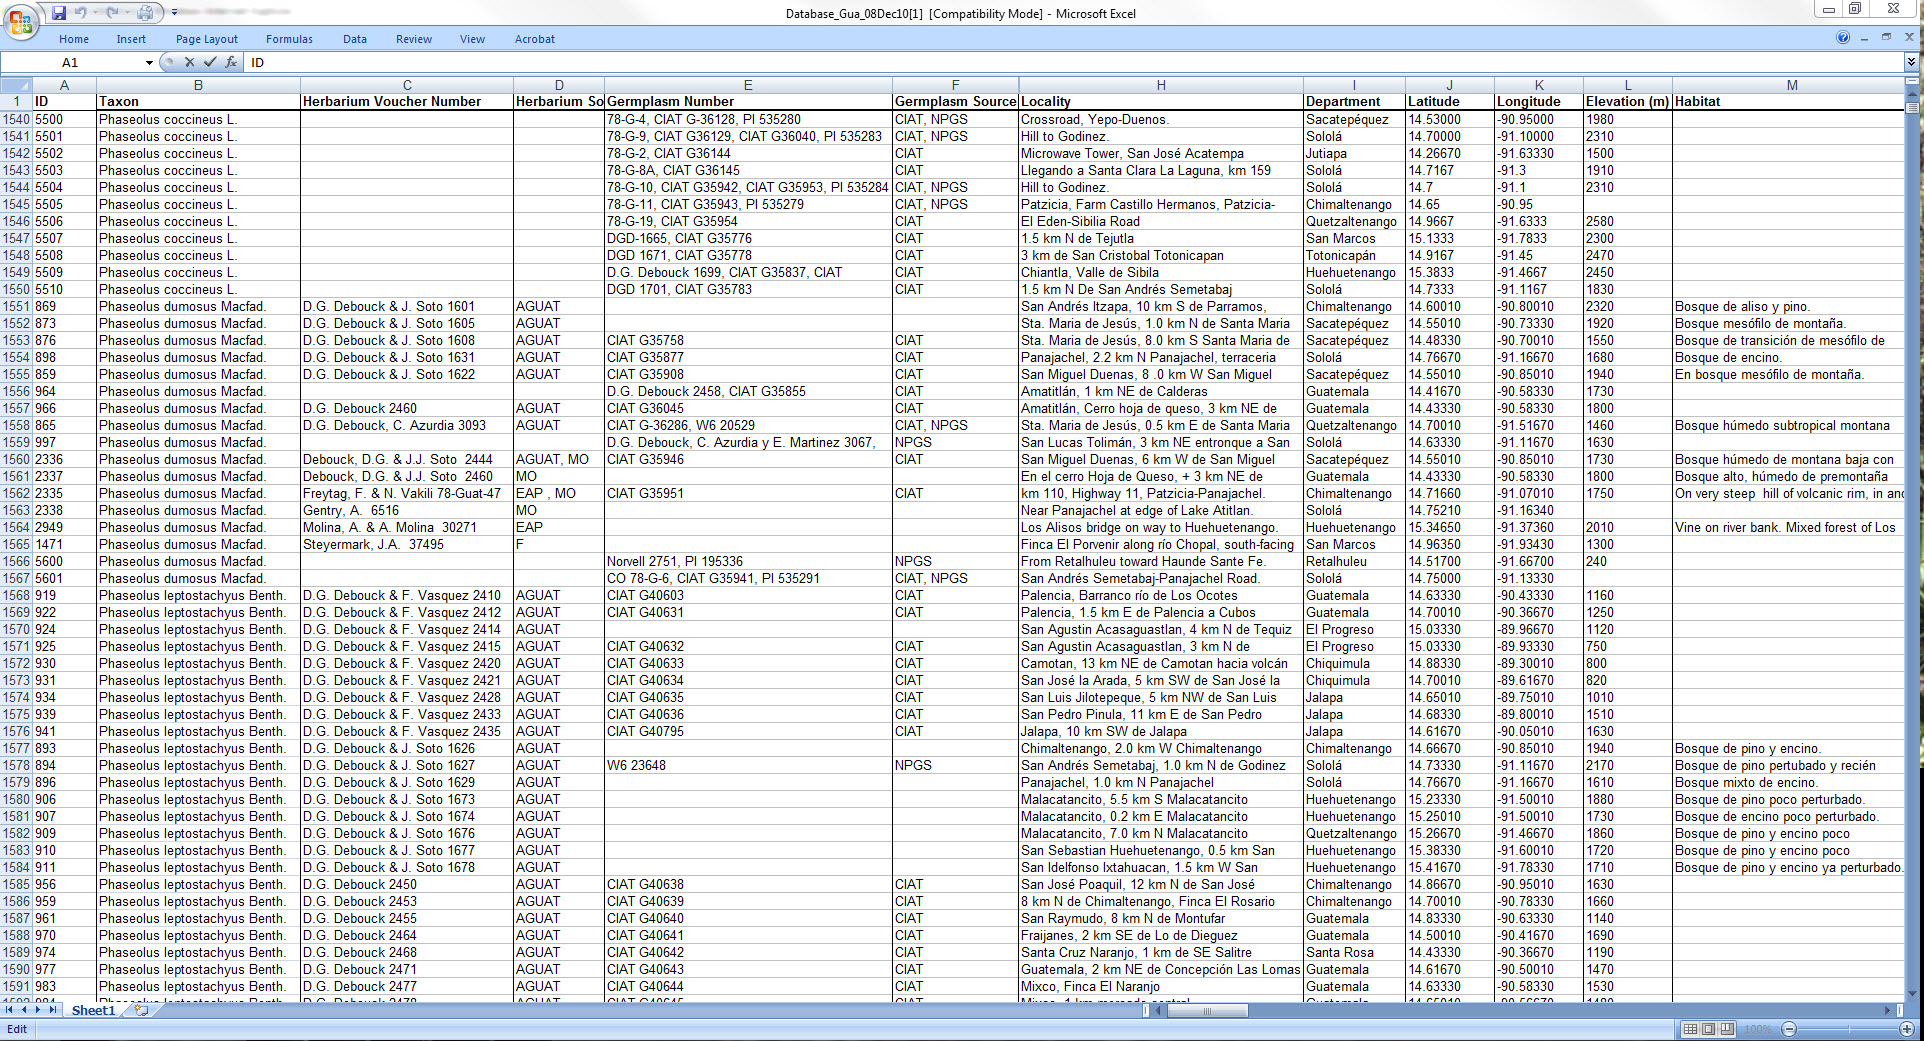 Database screen